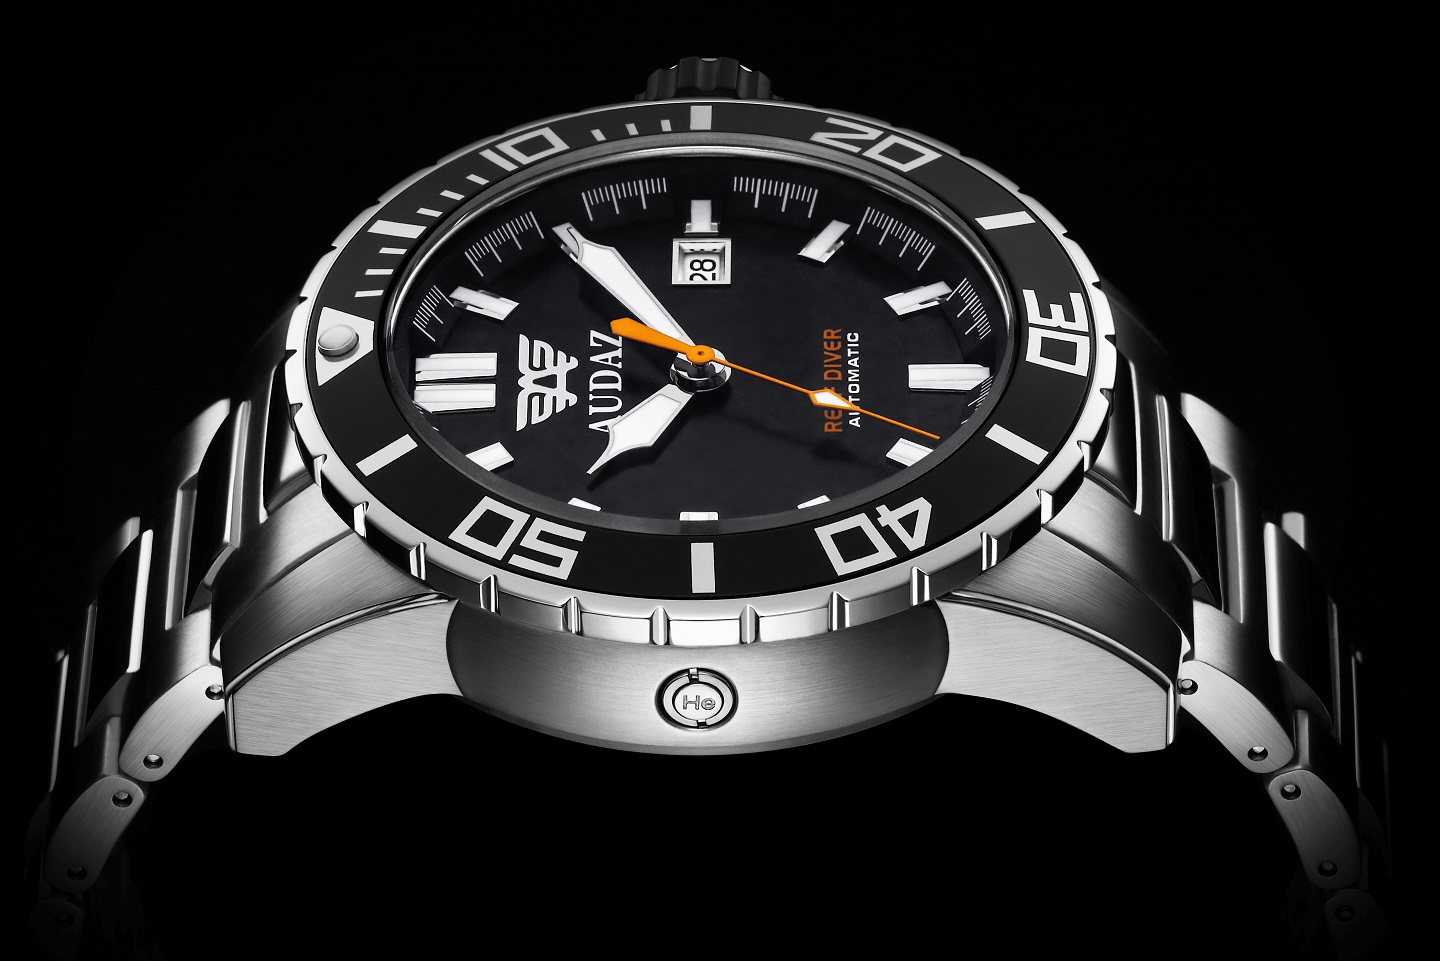 Audaz Reef Diver 300M Watch | aBlogtoWatch